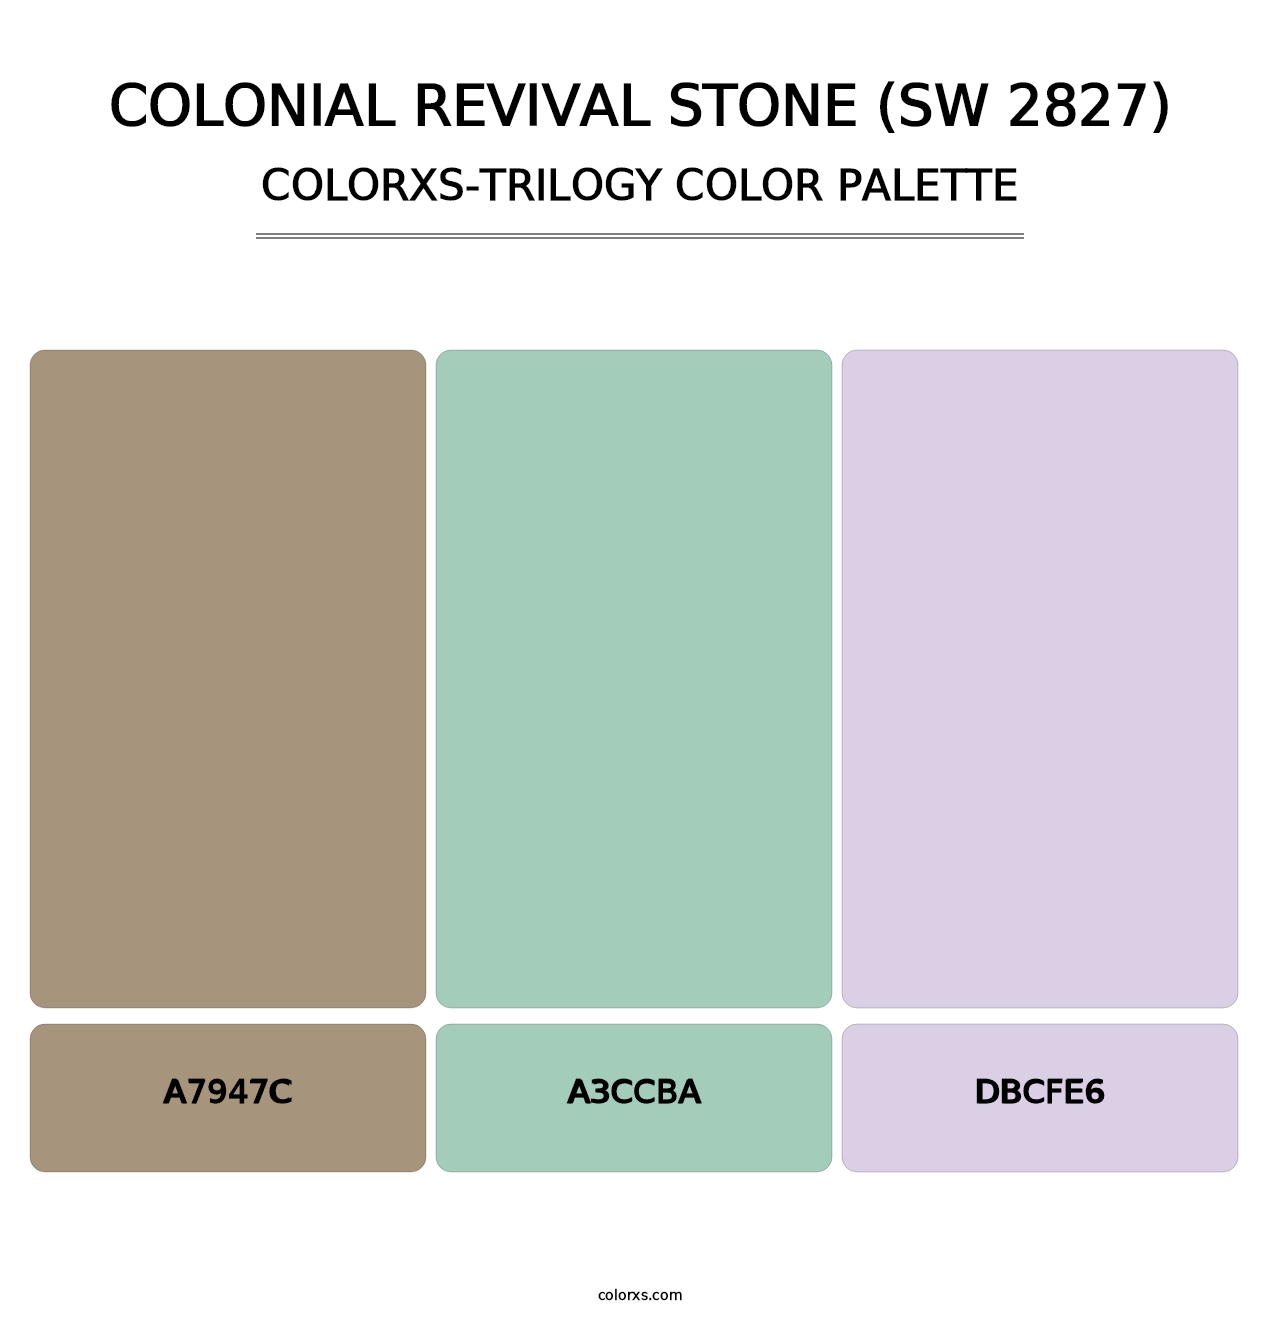 Colonial Revival Stone (SW 2827) - Colorxs Trilogy Palette